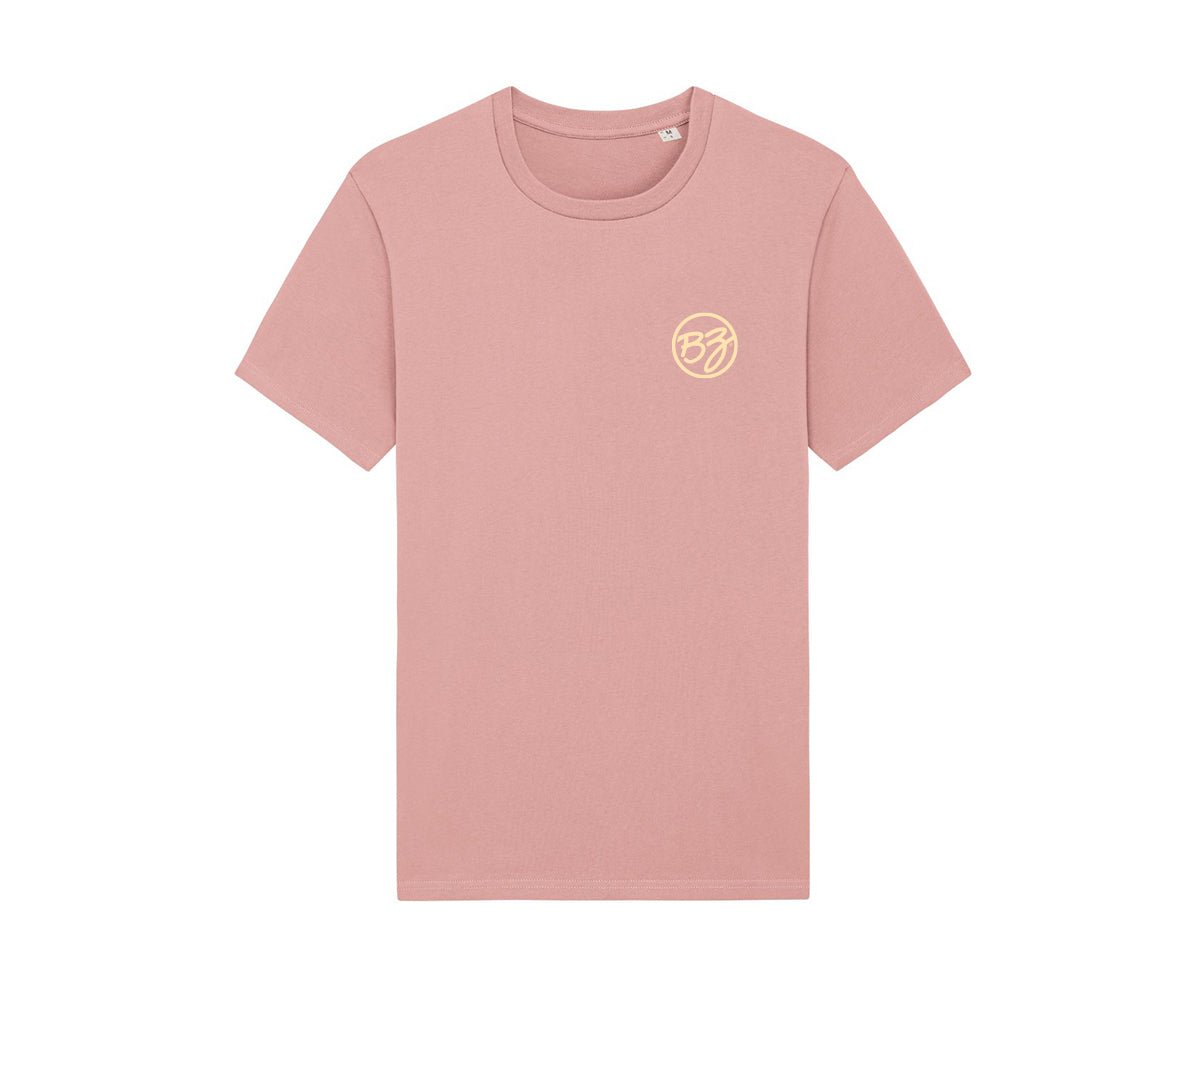 BZ Original T-Shirt - Canyon Pink - moreyboogie